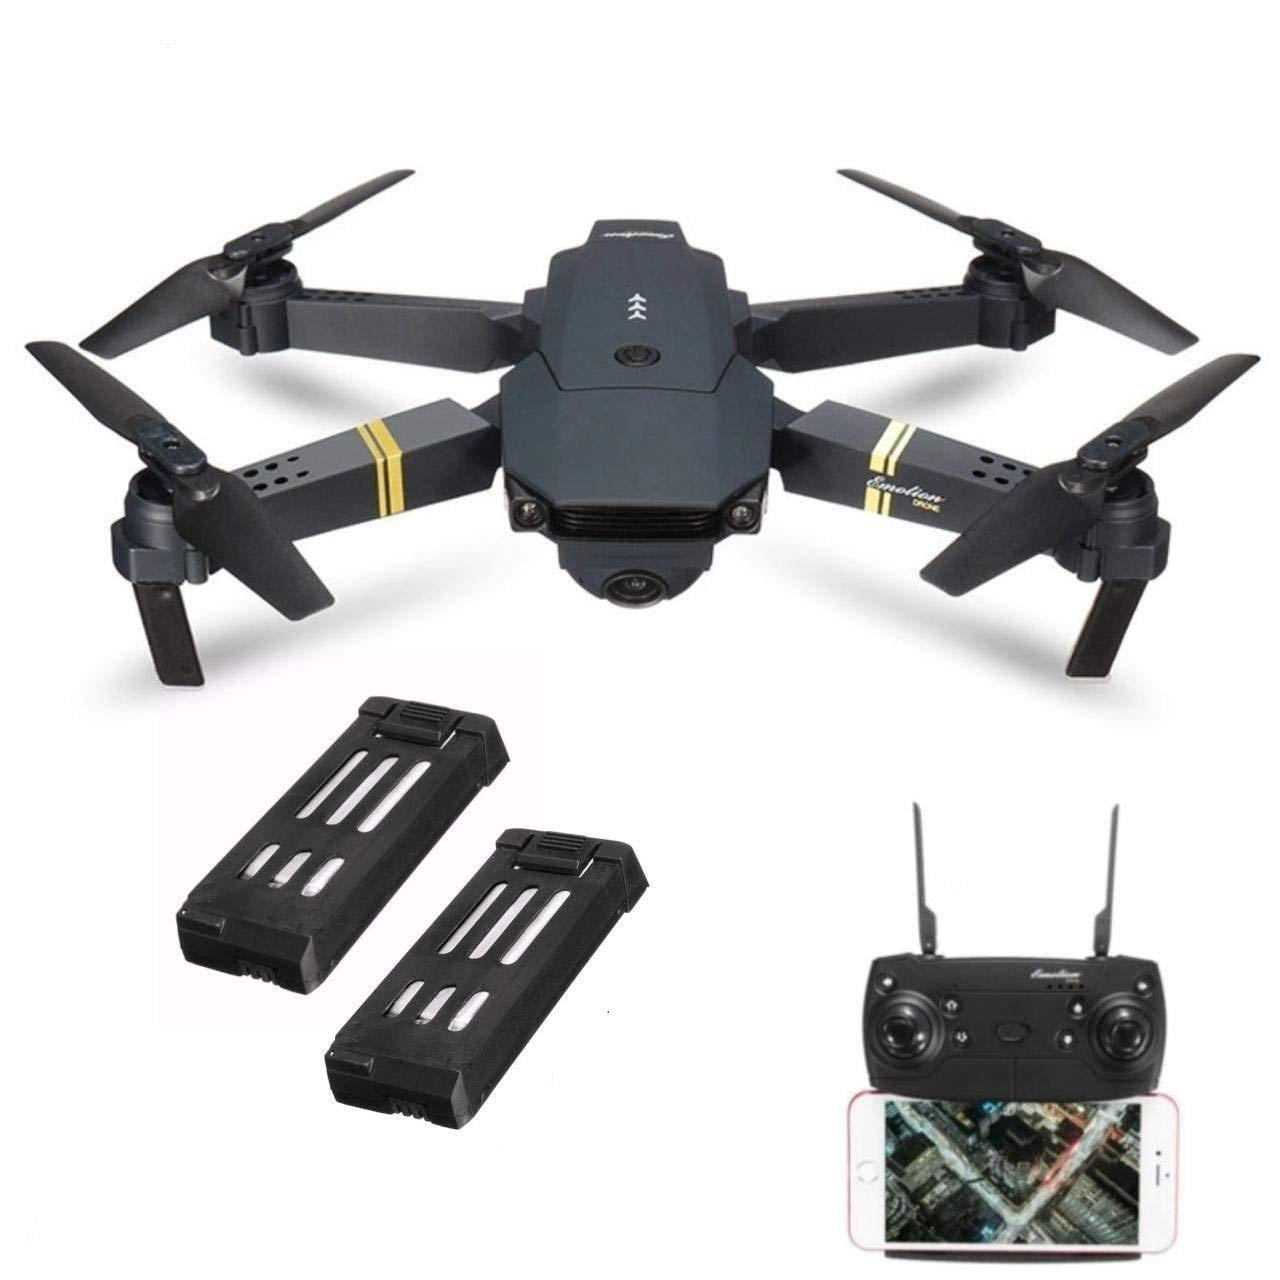 xtreme pro advance foldable drone with hd camera